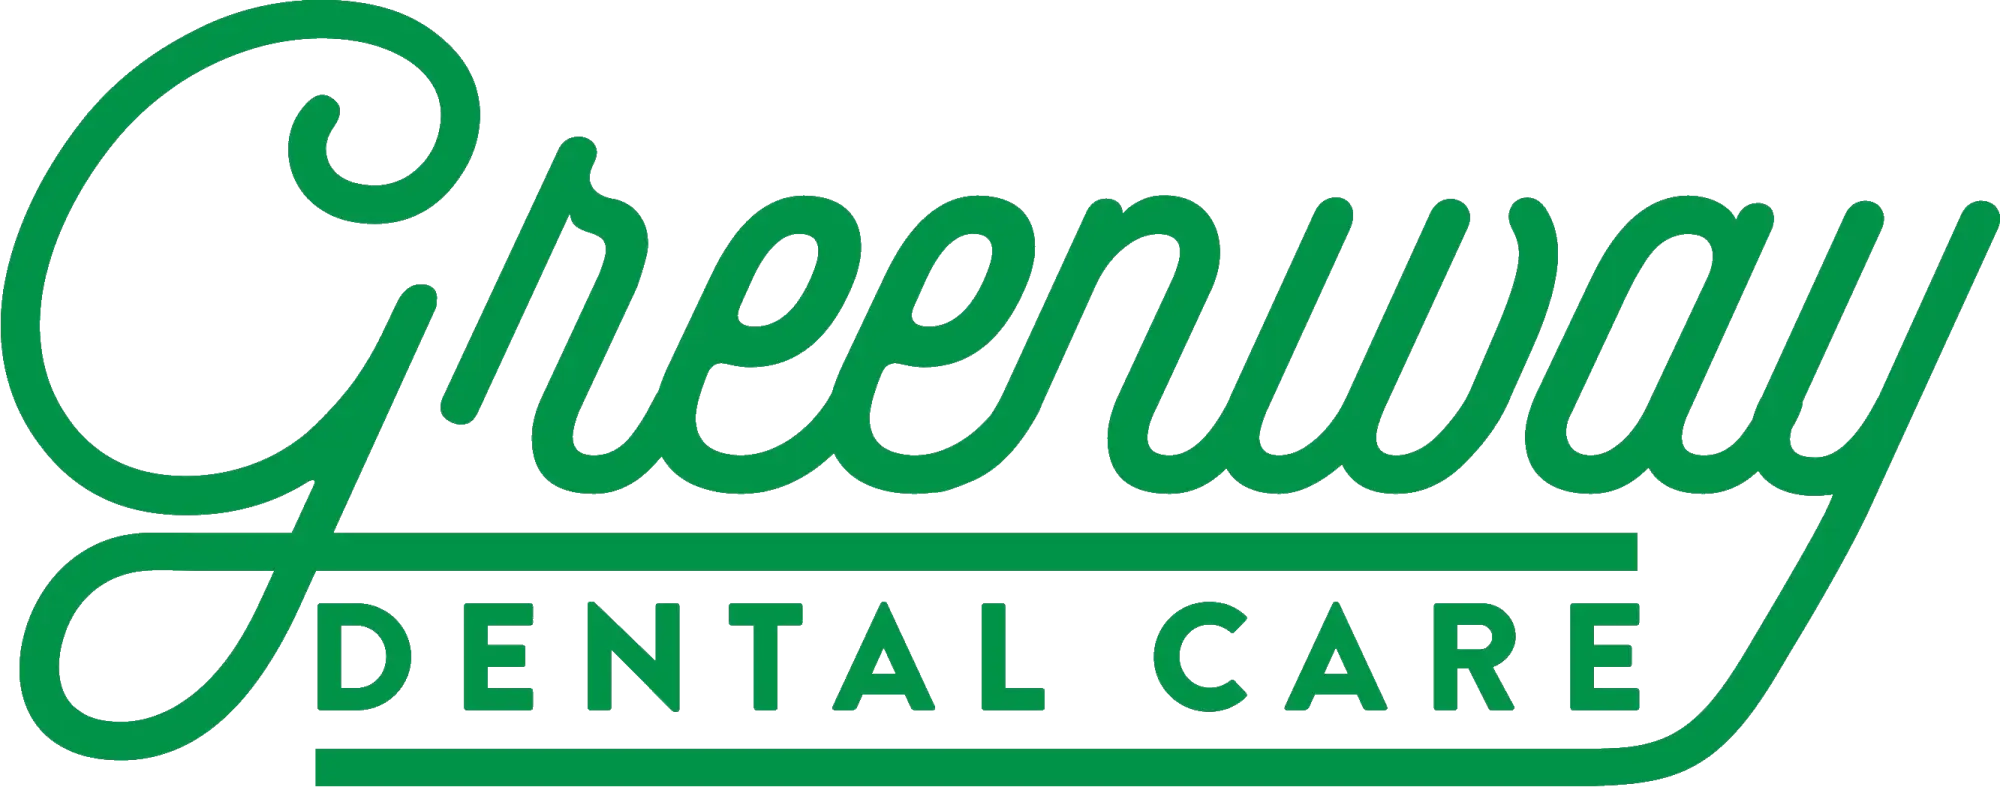 Greenway Dental Care logo